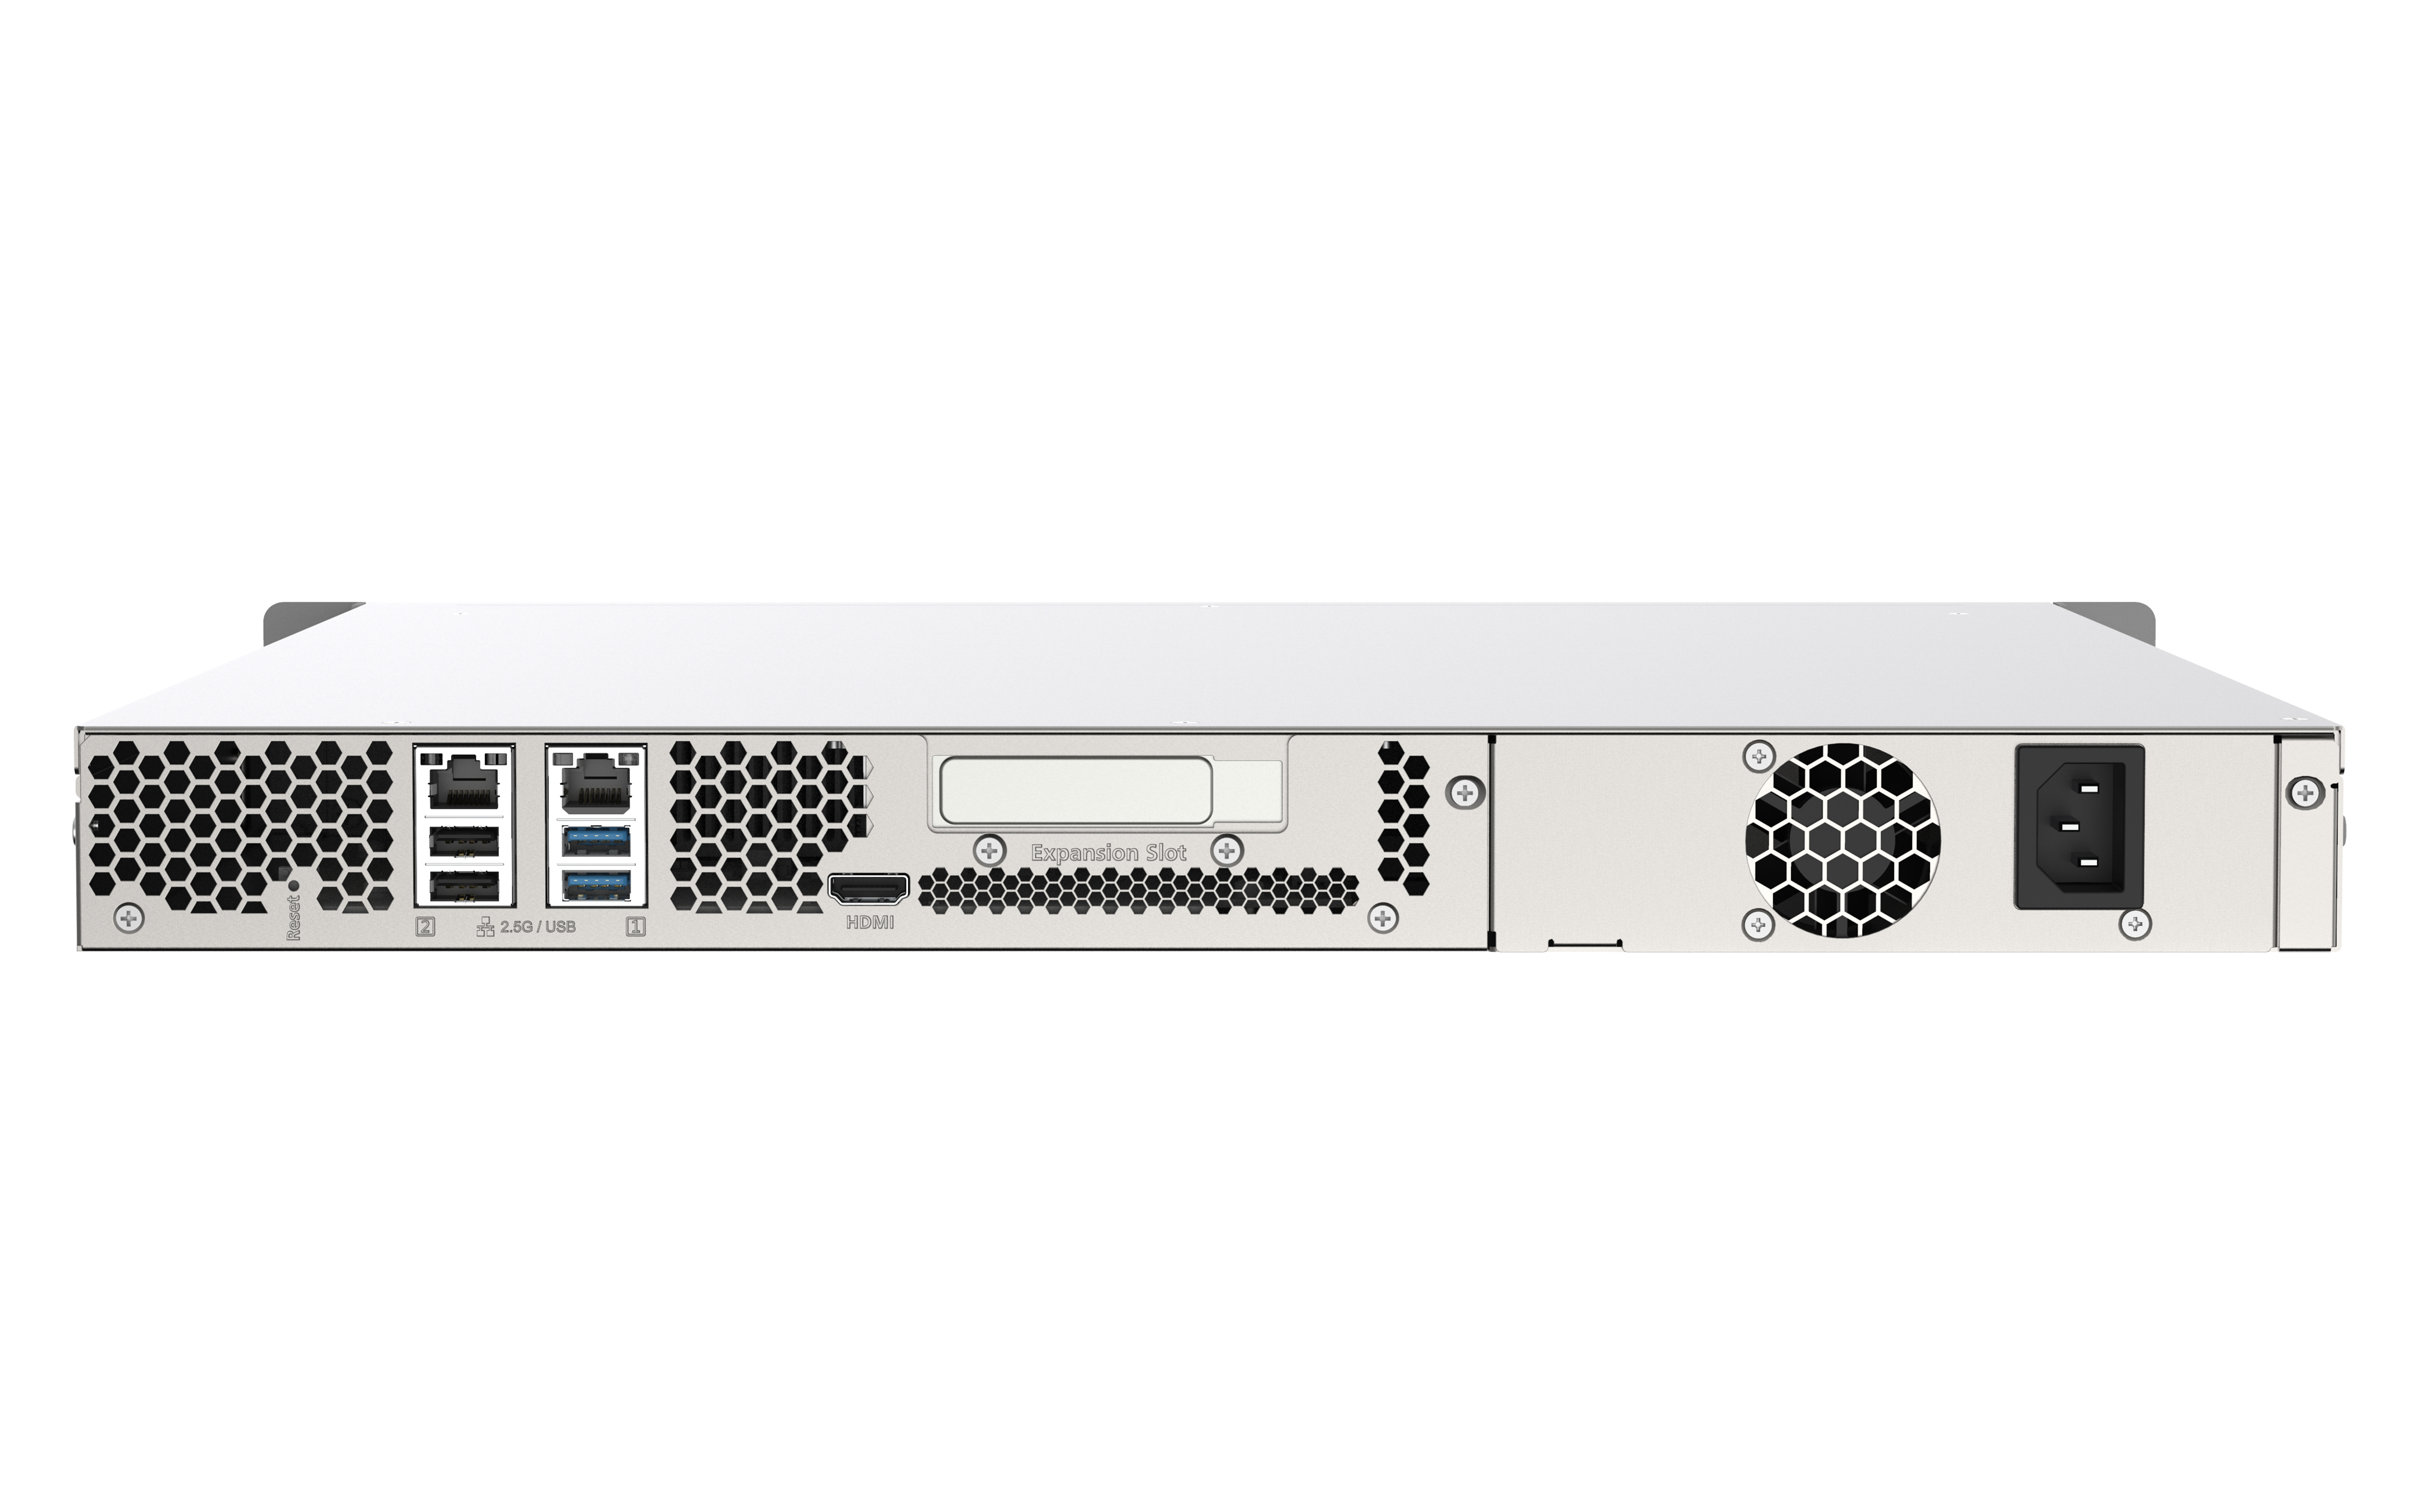 Server NAS QNAP TS-453DU Rack (1U) Collegamento ethernet LAN Nero, Grigio J4125 [TS-453DU-4G]